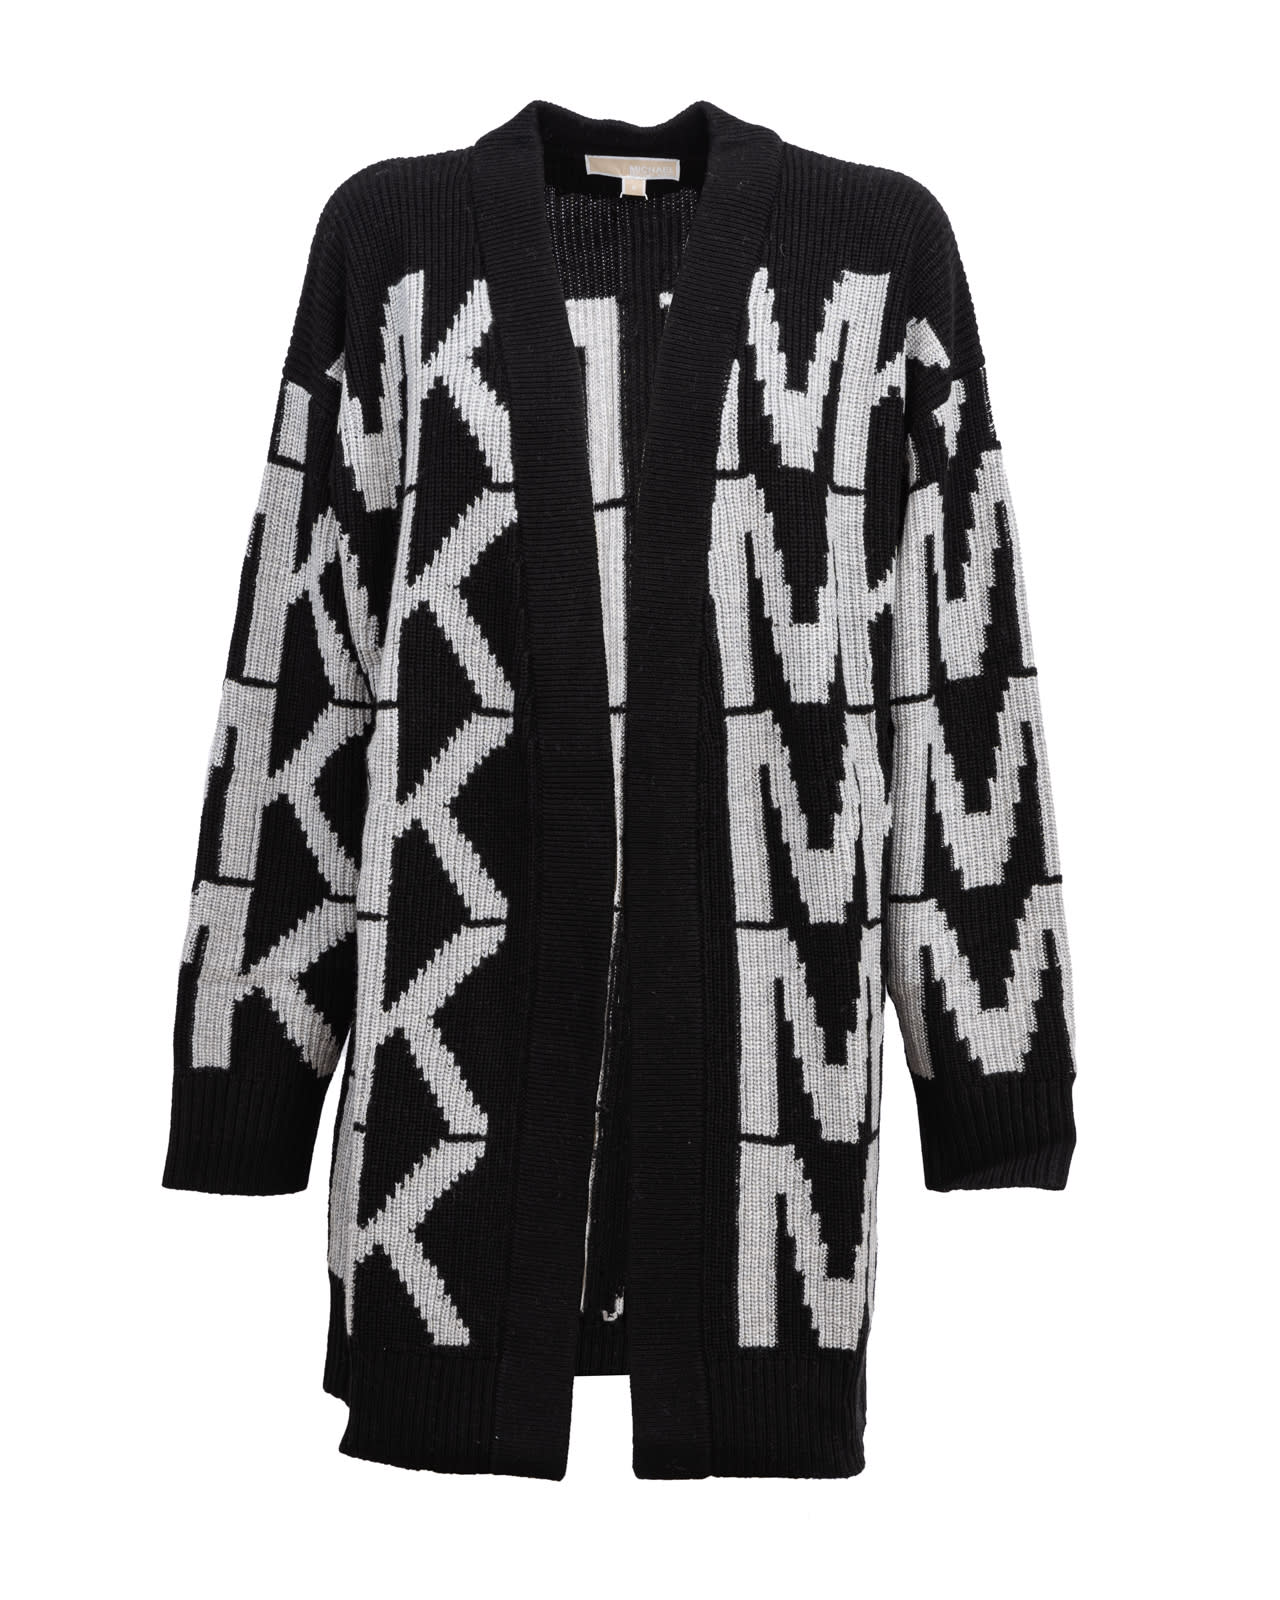 Michael Kors wool cardigan